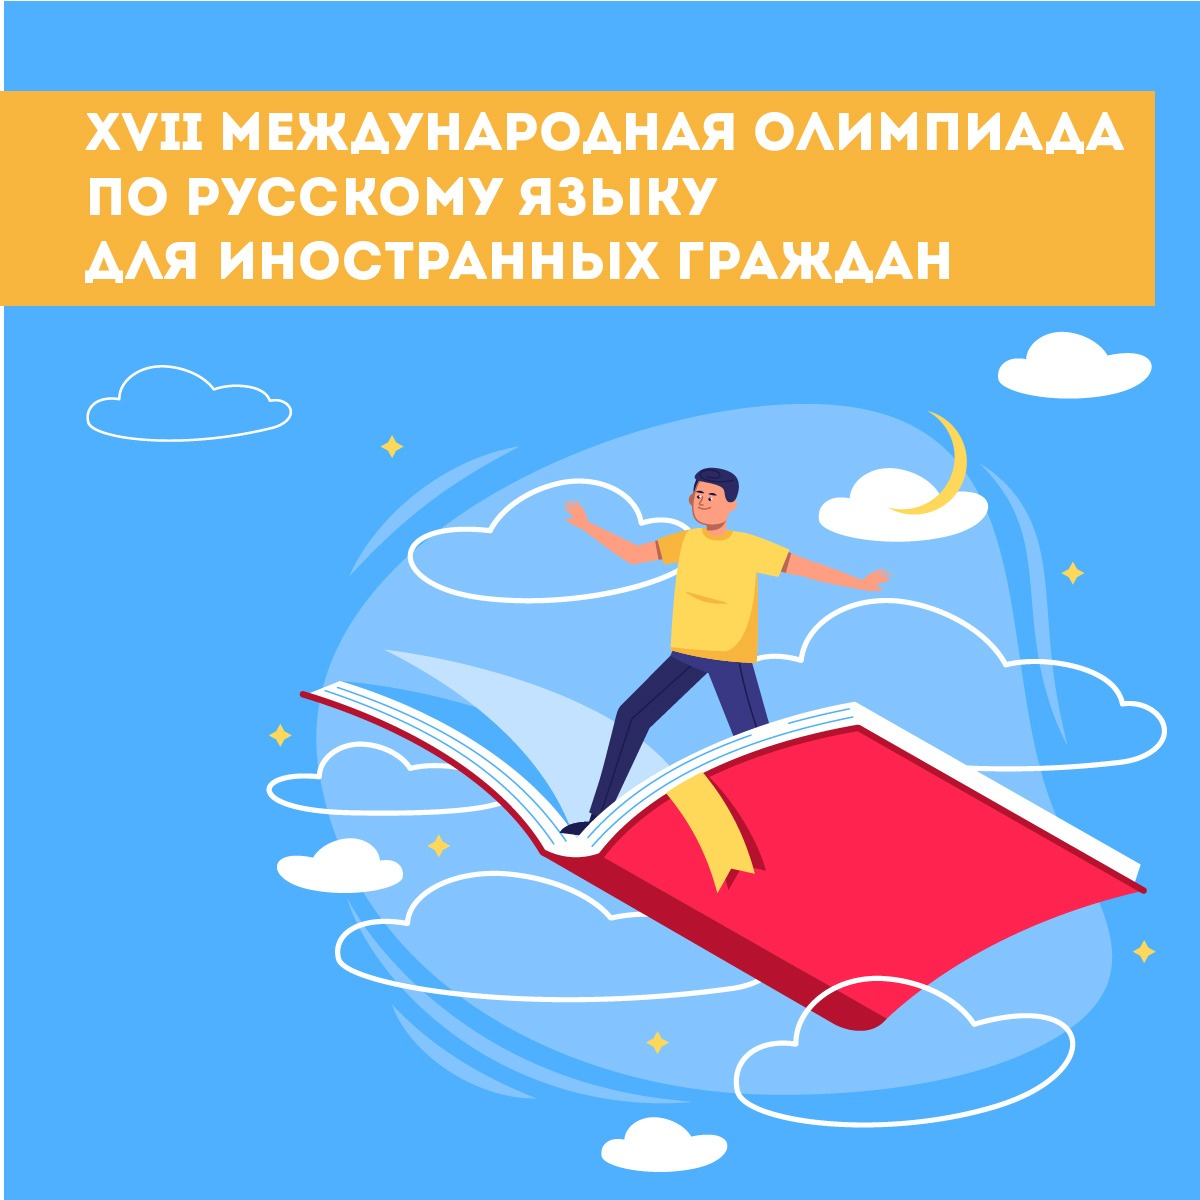 XVII Международная олимпиада по русскому языку для иностранных граждан